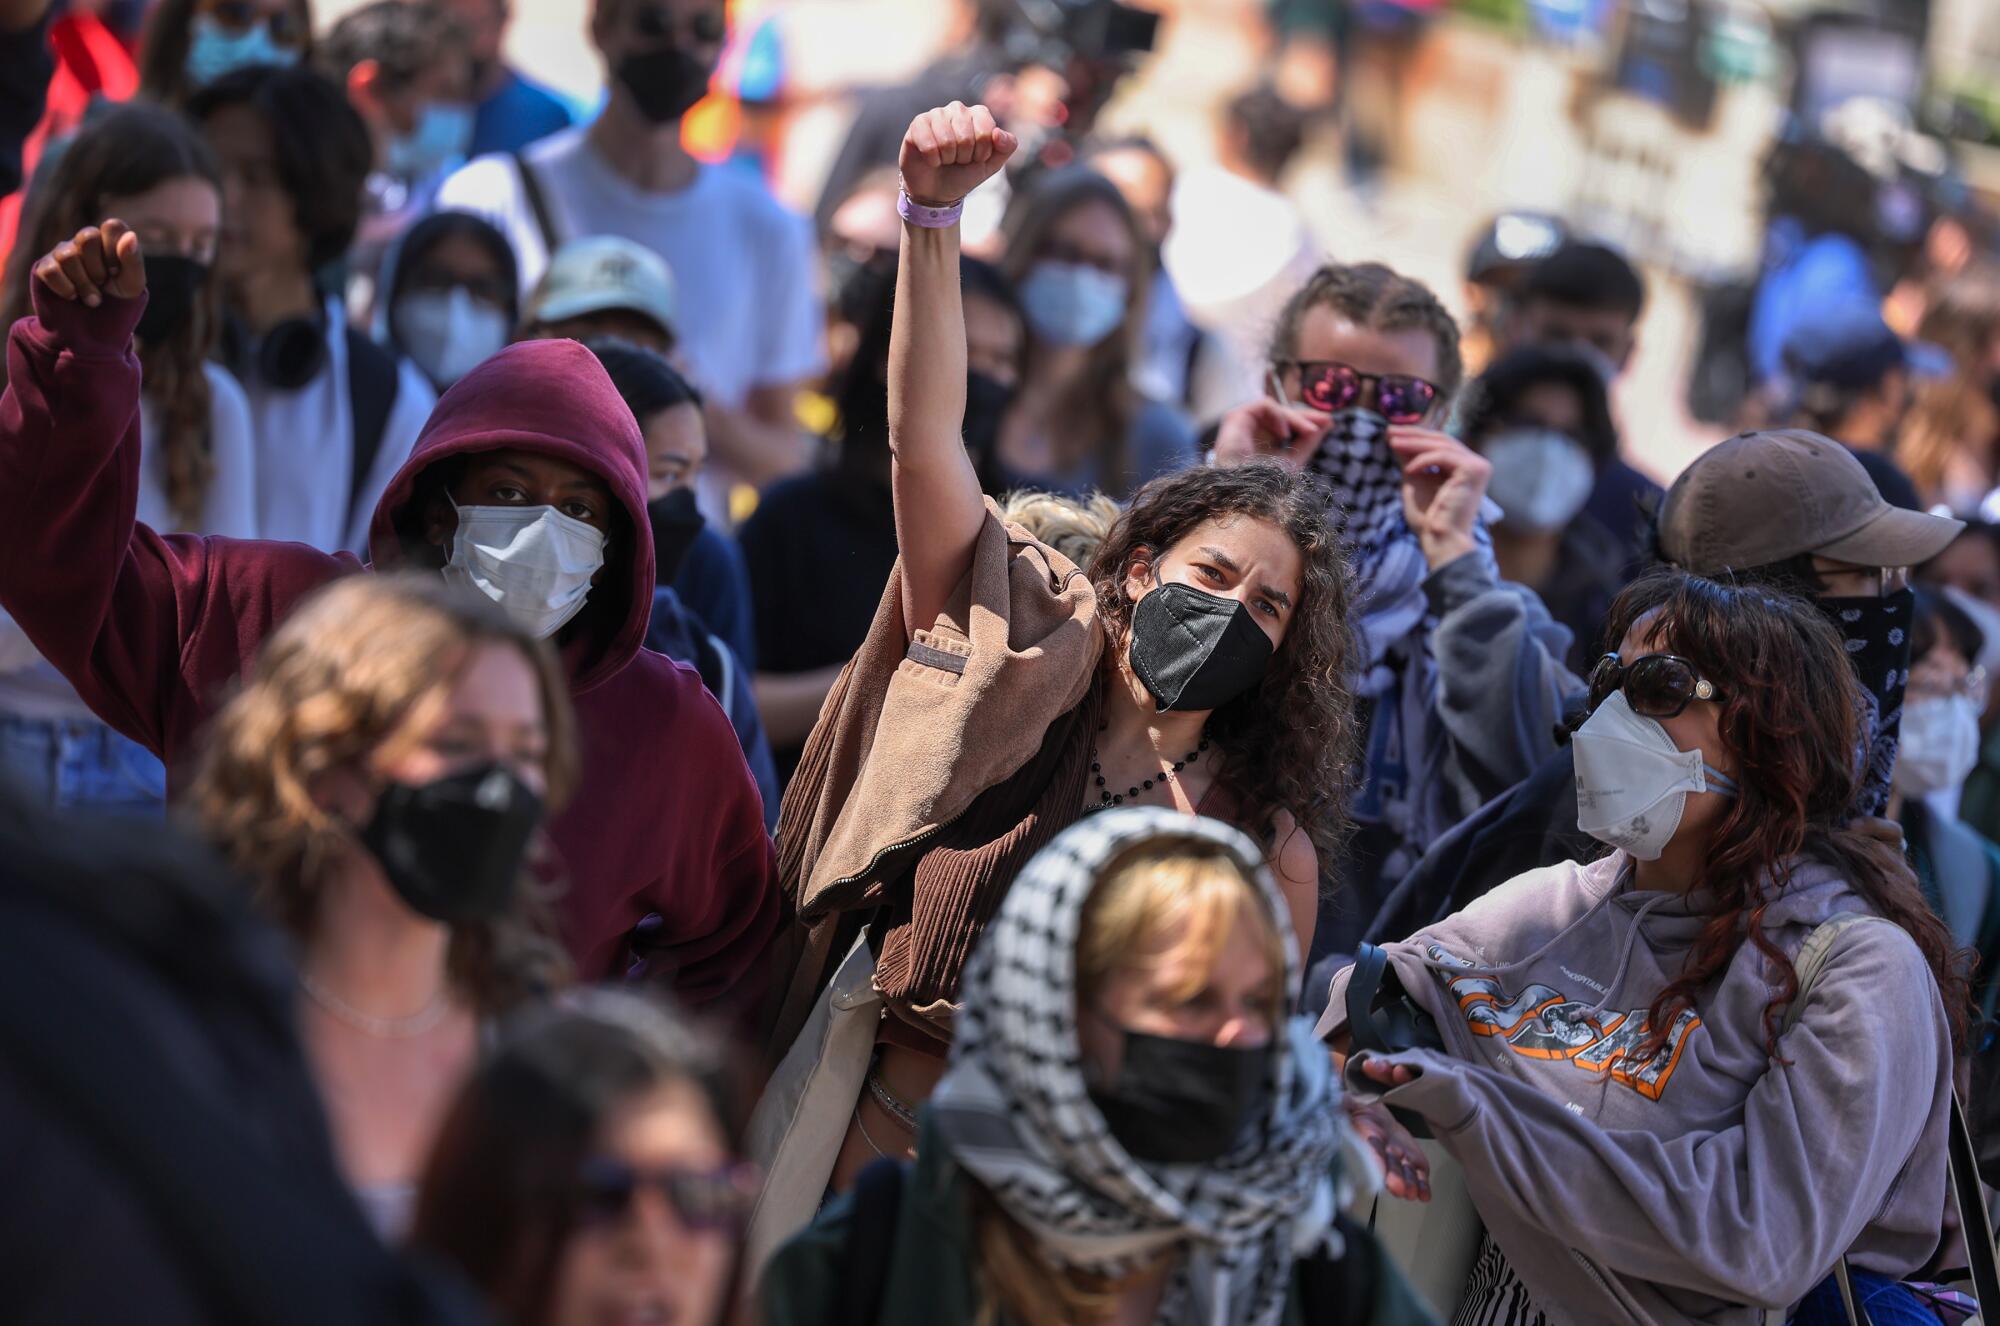 A crowd of pro-Palestinian activists wearing masks and kaffiyehs